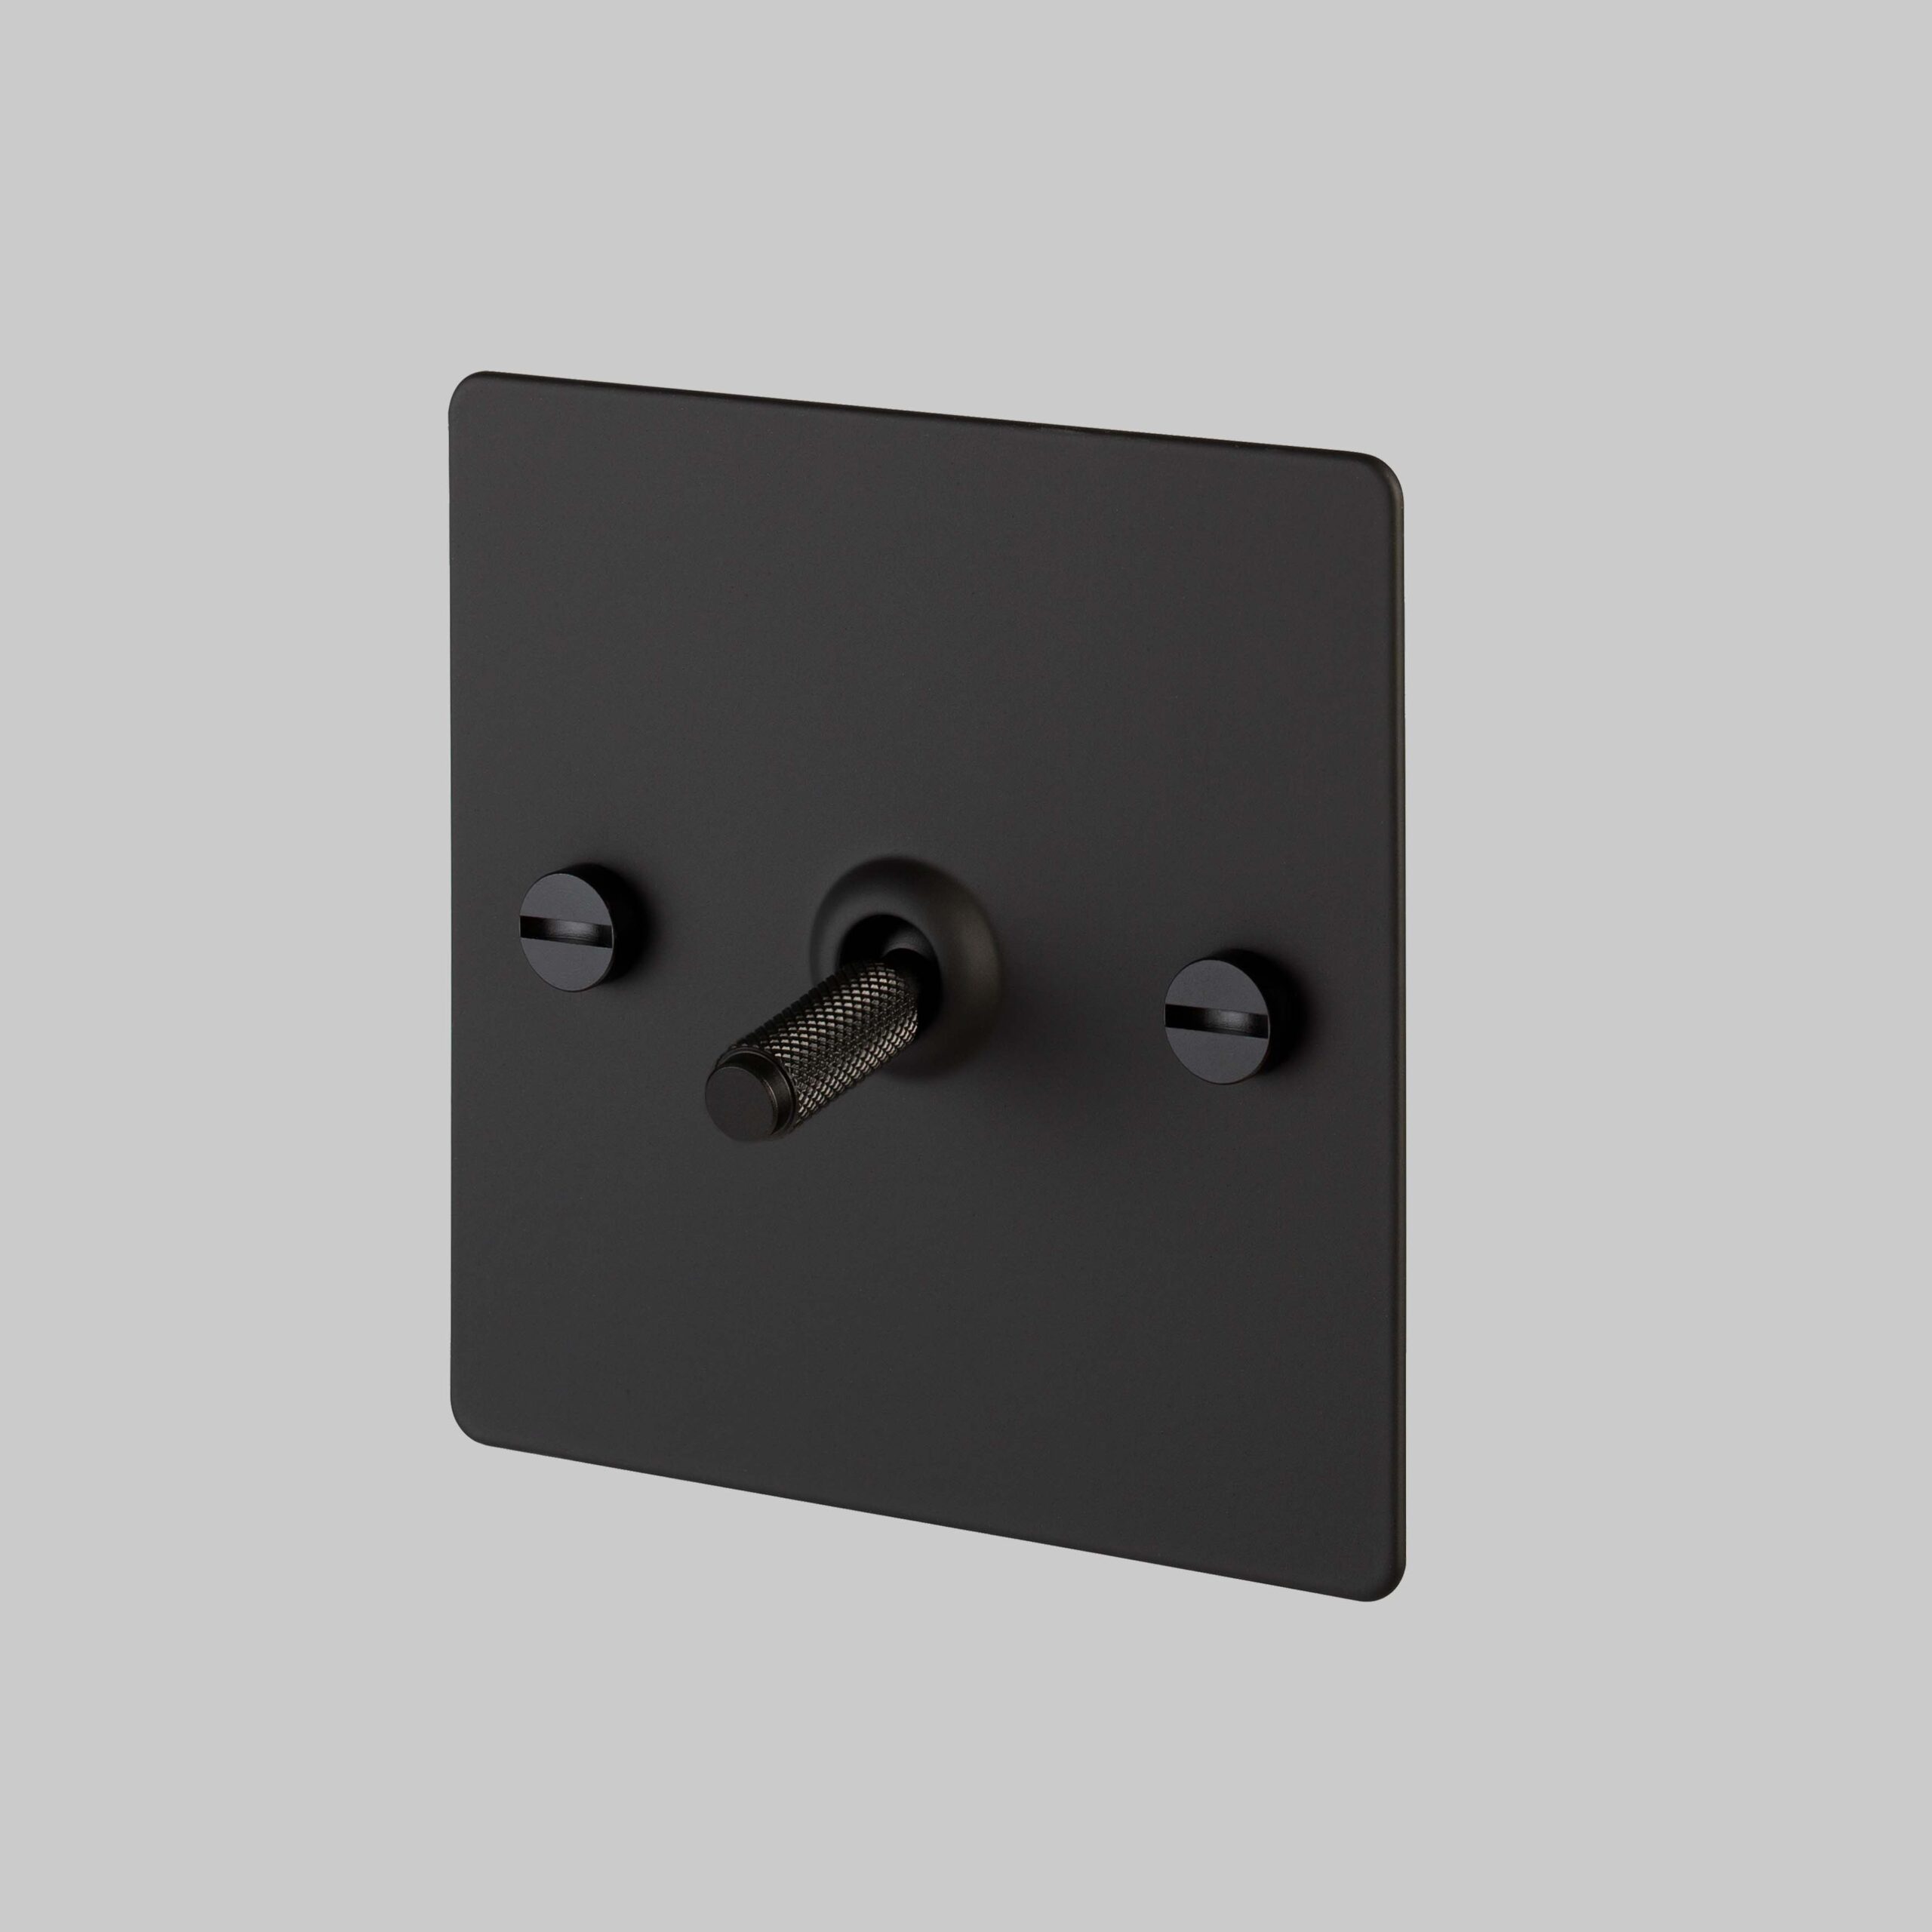 1g-intermediate-toggle-switch-black-plate